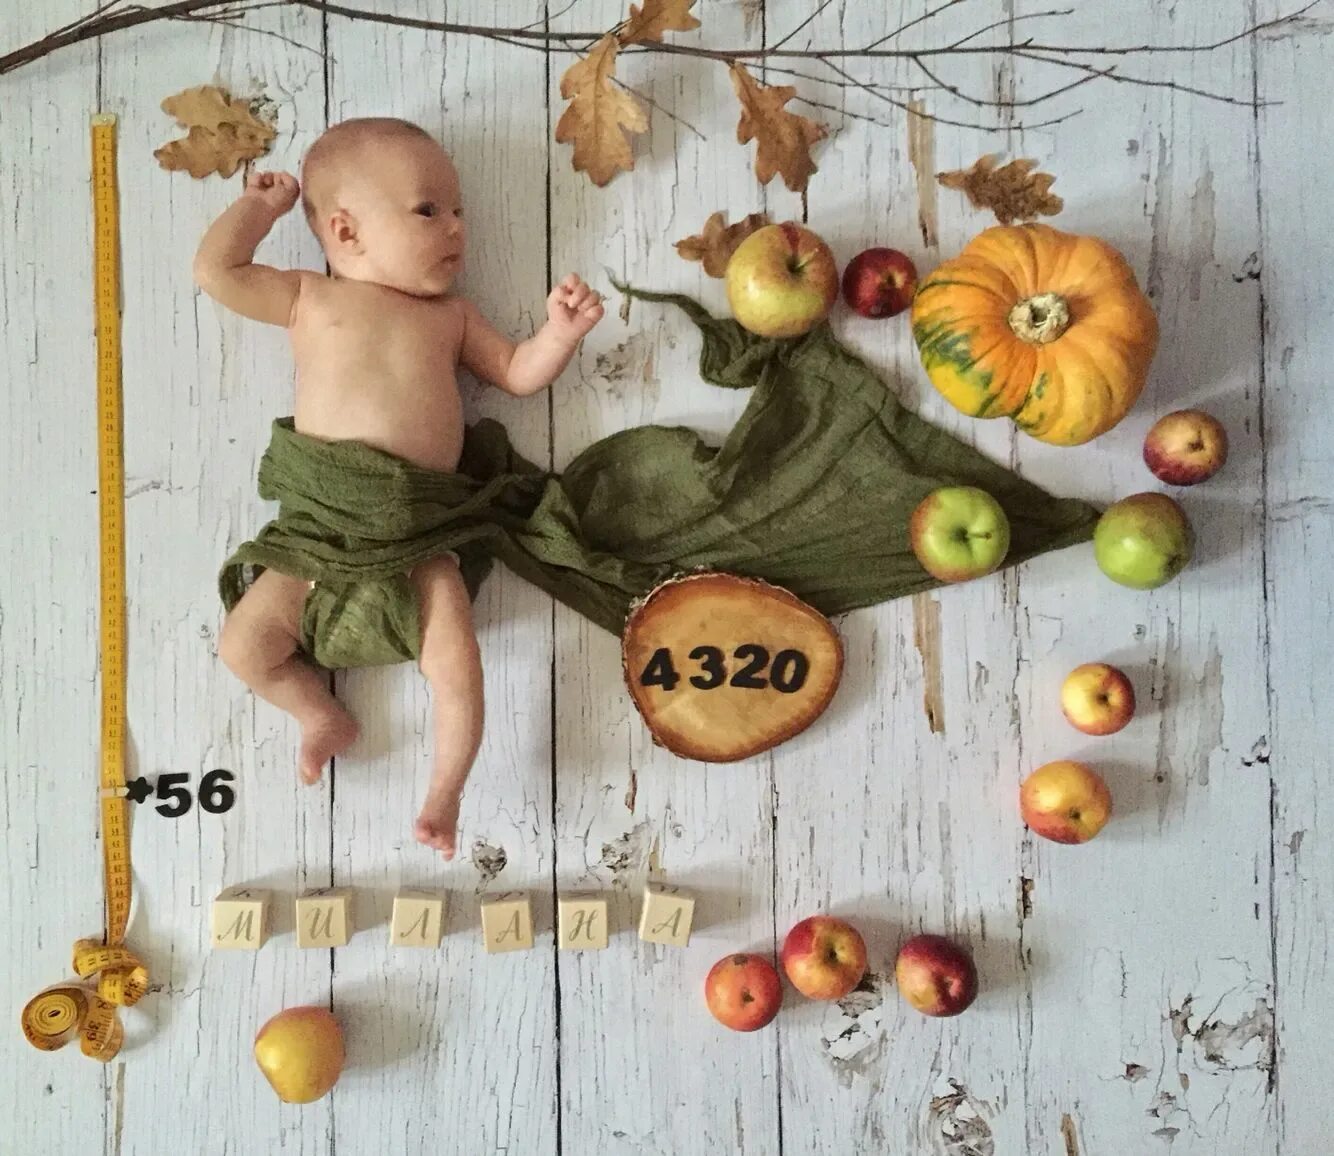 Фотосессия ребенка по месяцам. Фотосессия по месяцам малыша. Фотосессия по месяцам малыша с цифрами. Фотосессия младенцев по месяцам с фруктами.